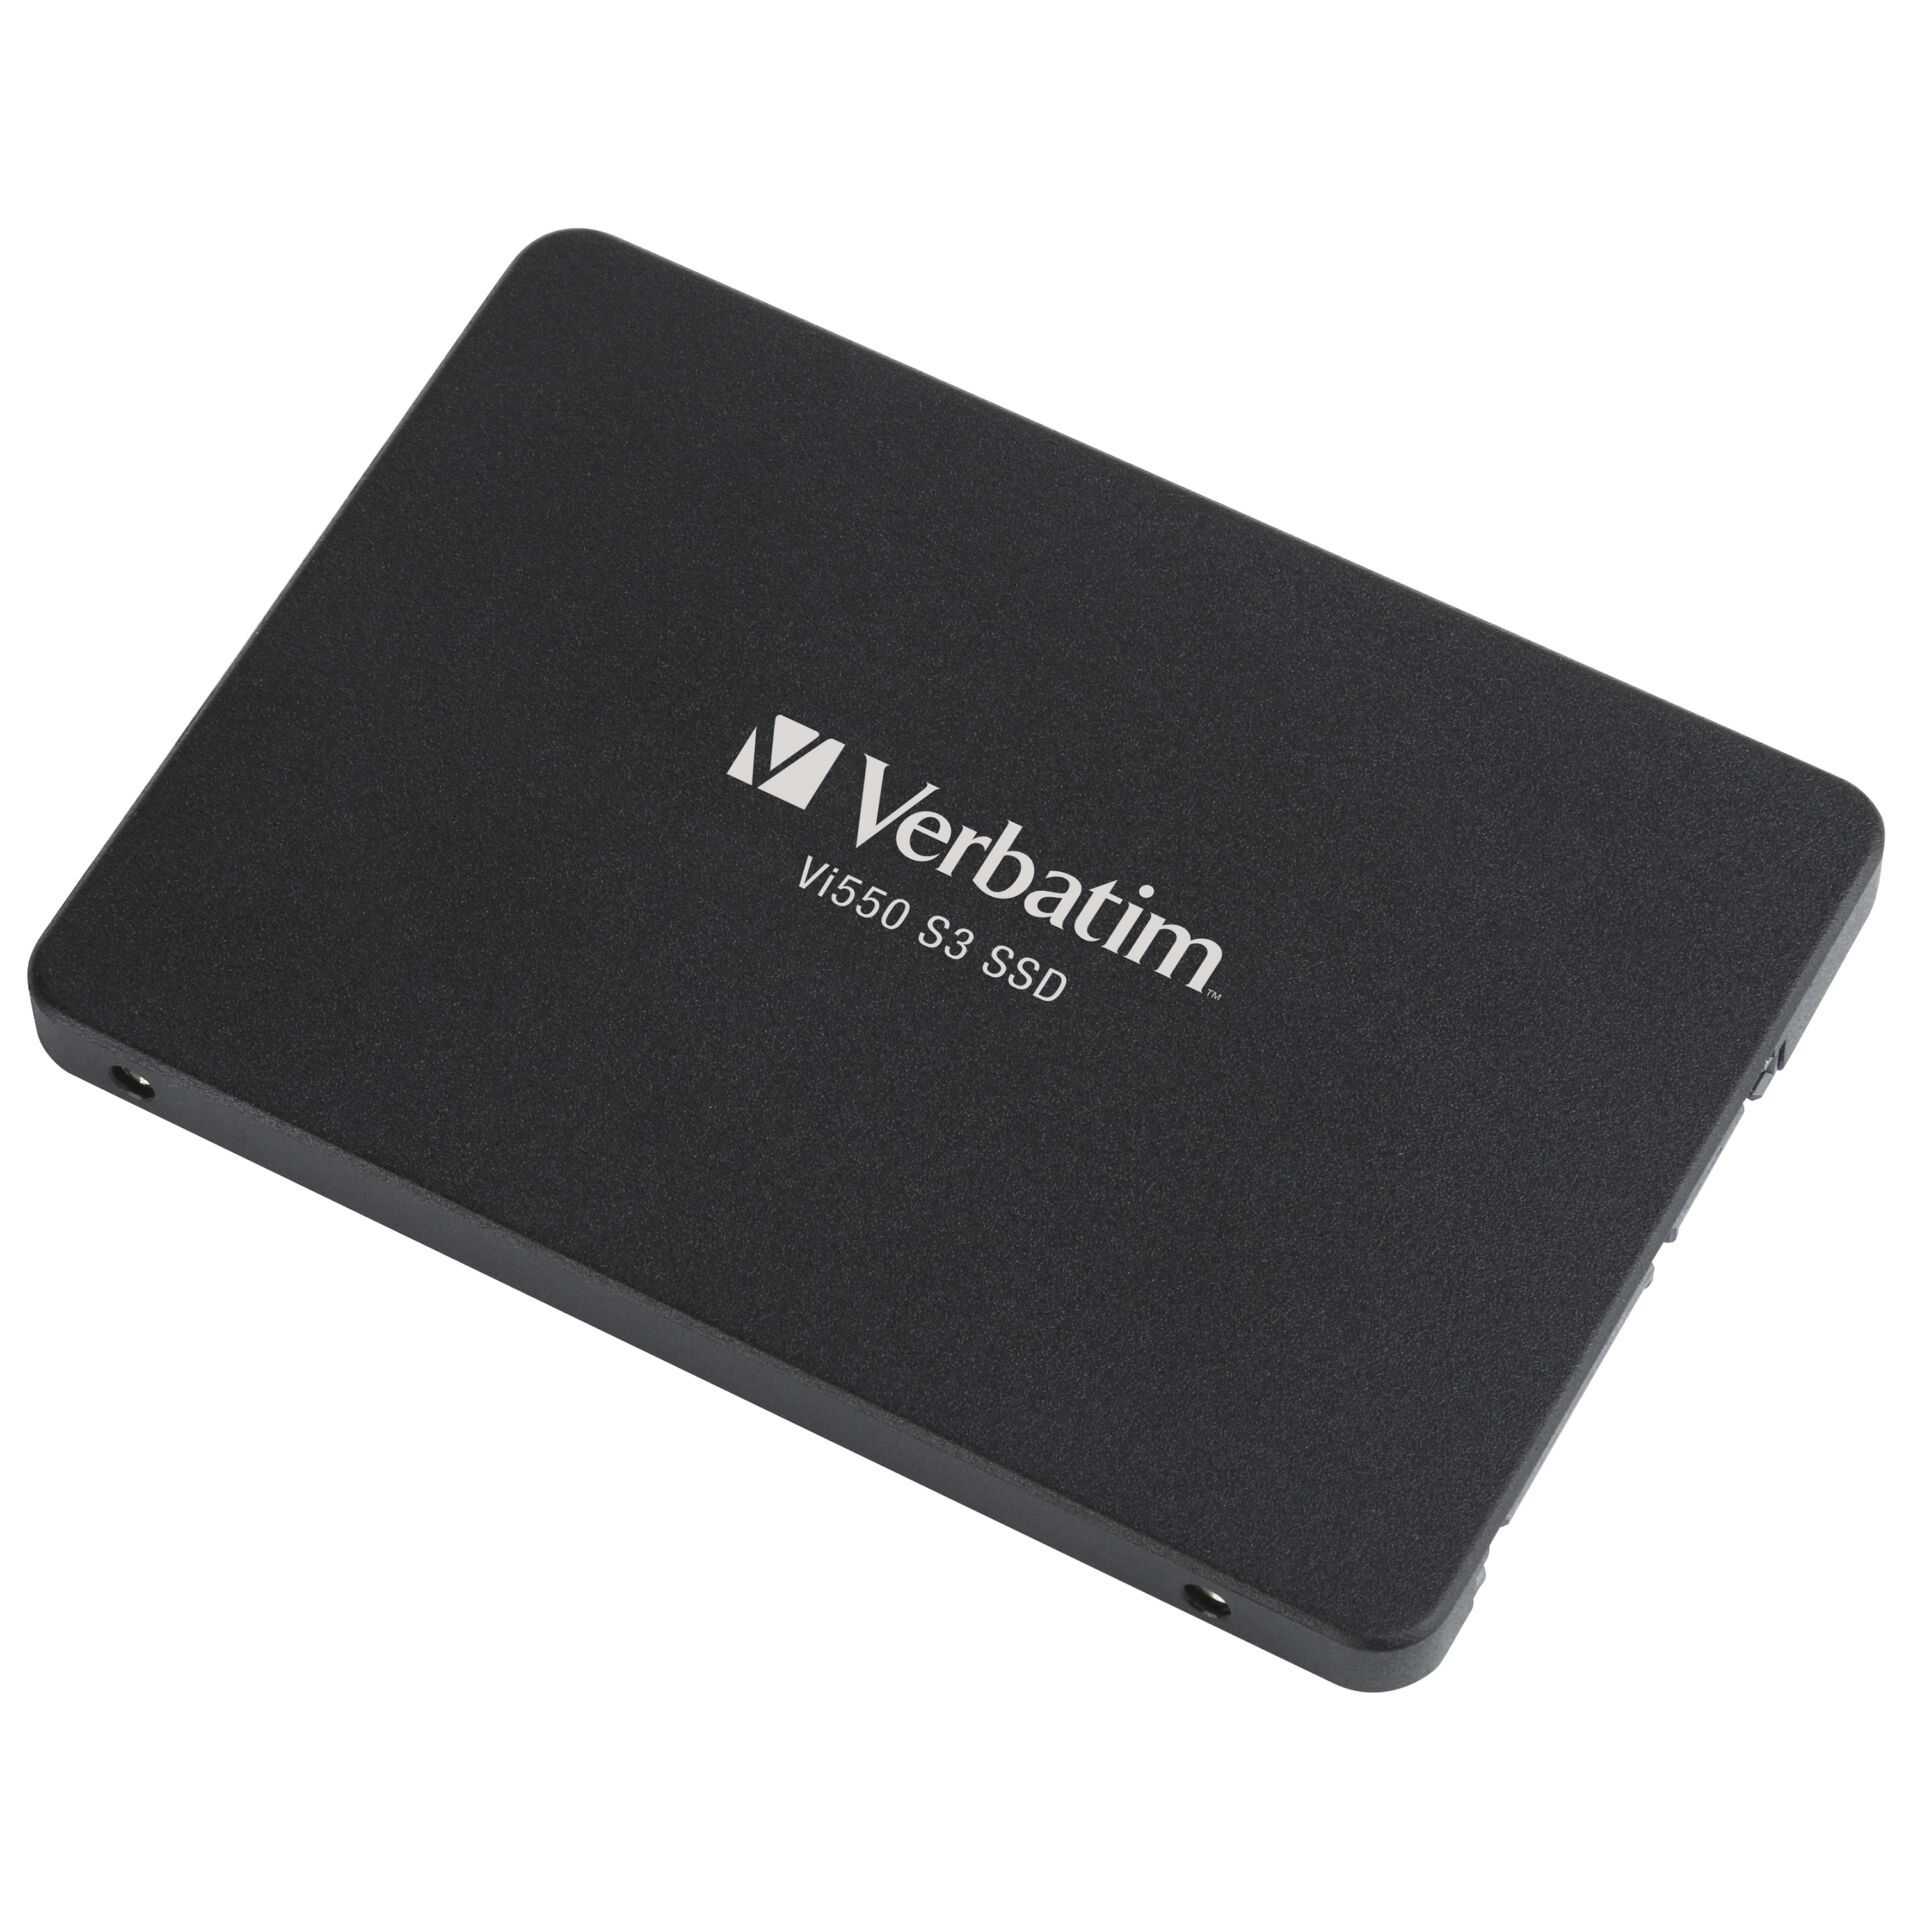 Verbatim Vi550 S3 2,5  SSD   4TB SATA III